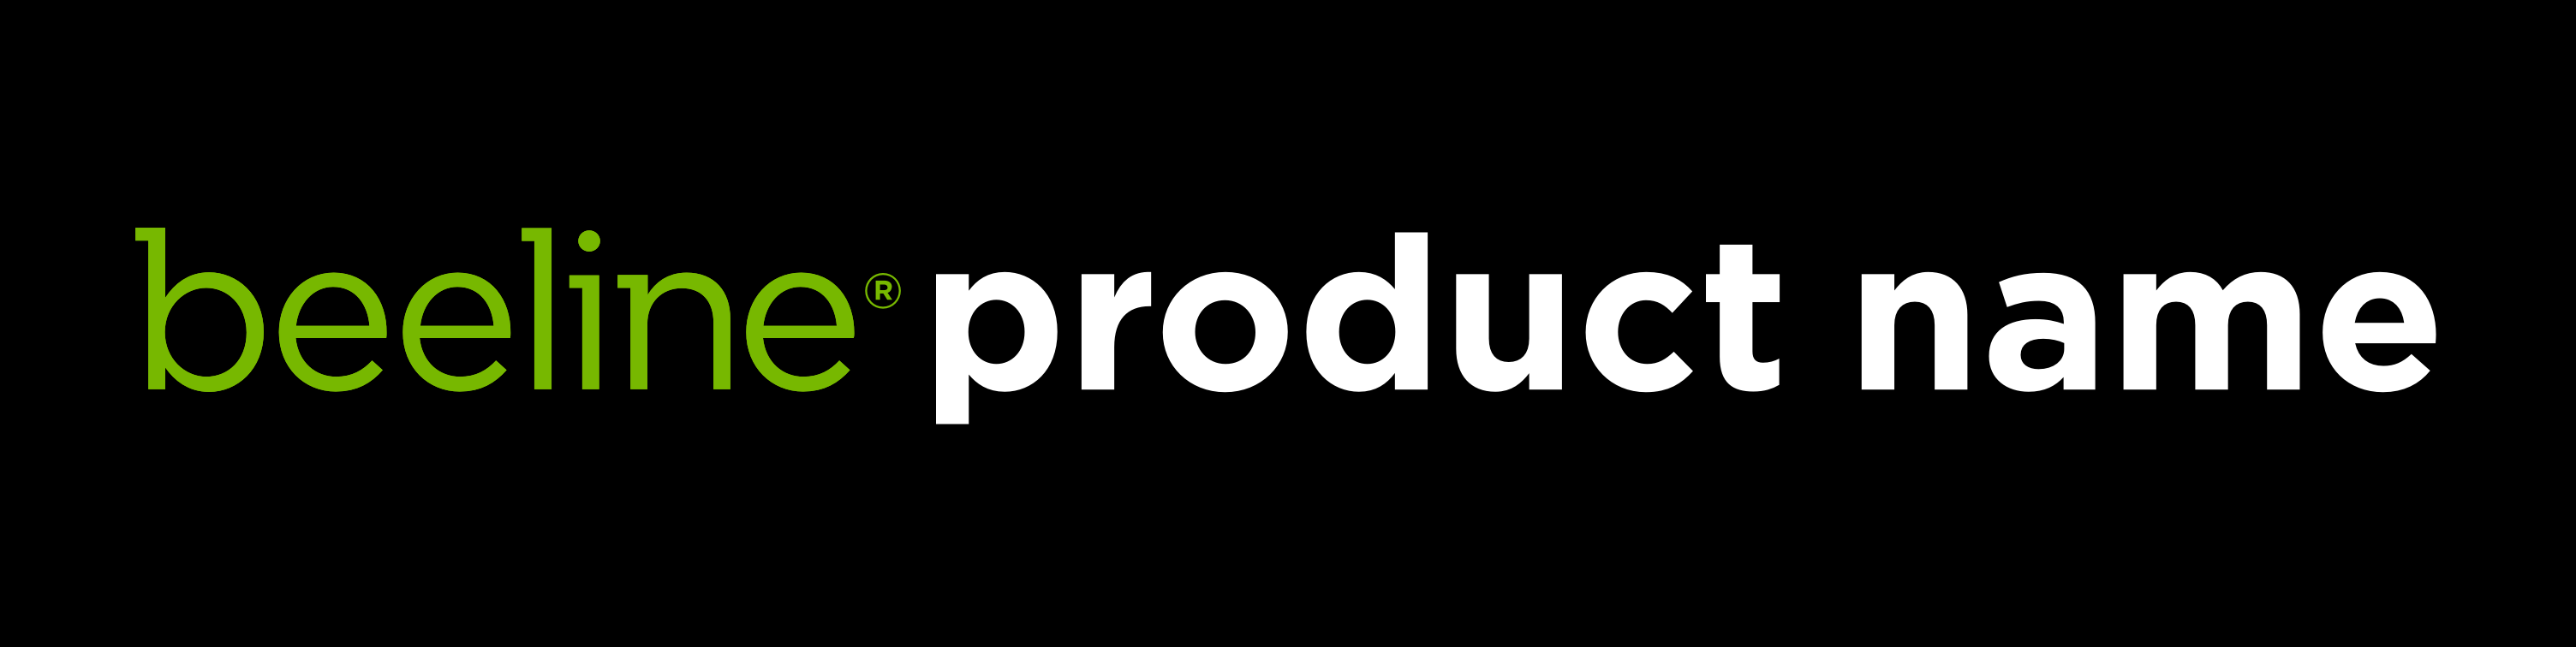 Product logo light version